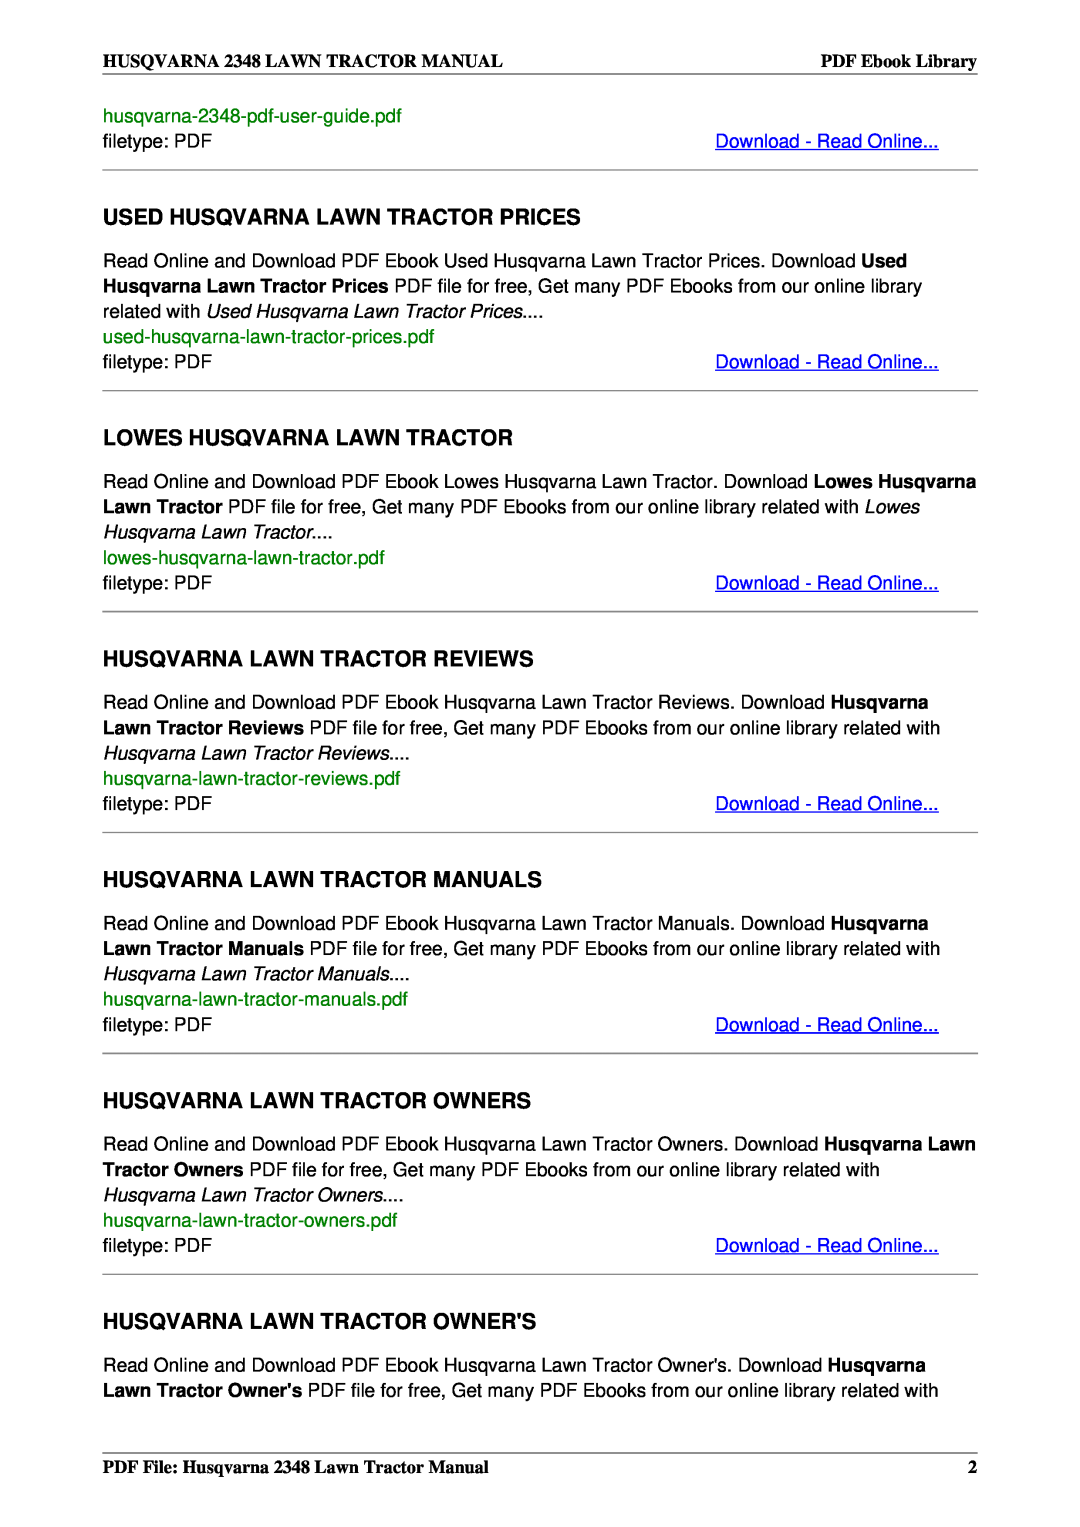 Husqvarna 2348 Used Husqvarna Lawn Tractor Prices, Lowes Husqvarna Lawn Tractor, Husqvarna Lawn Tractor Reviews 